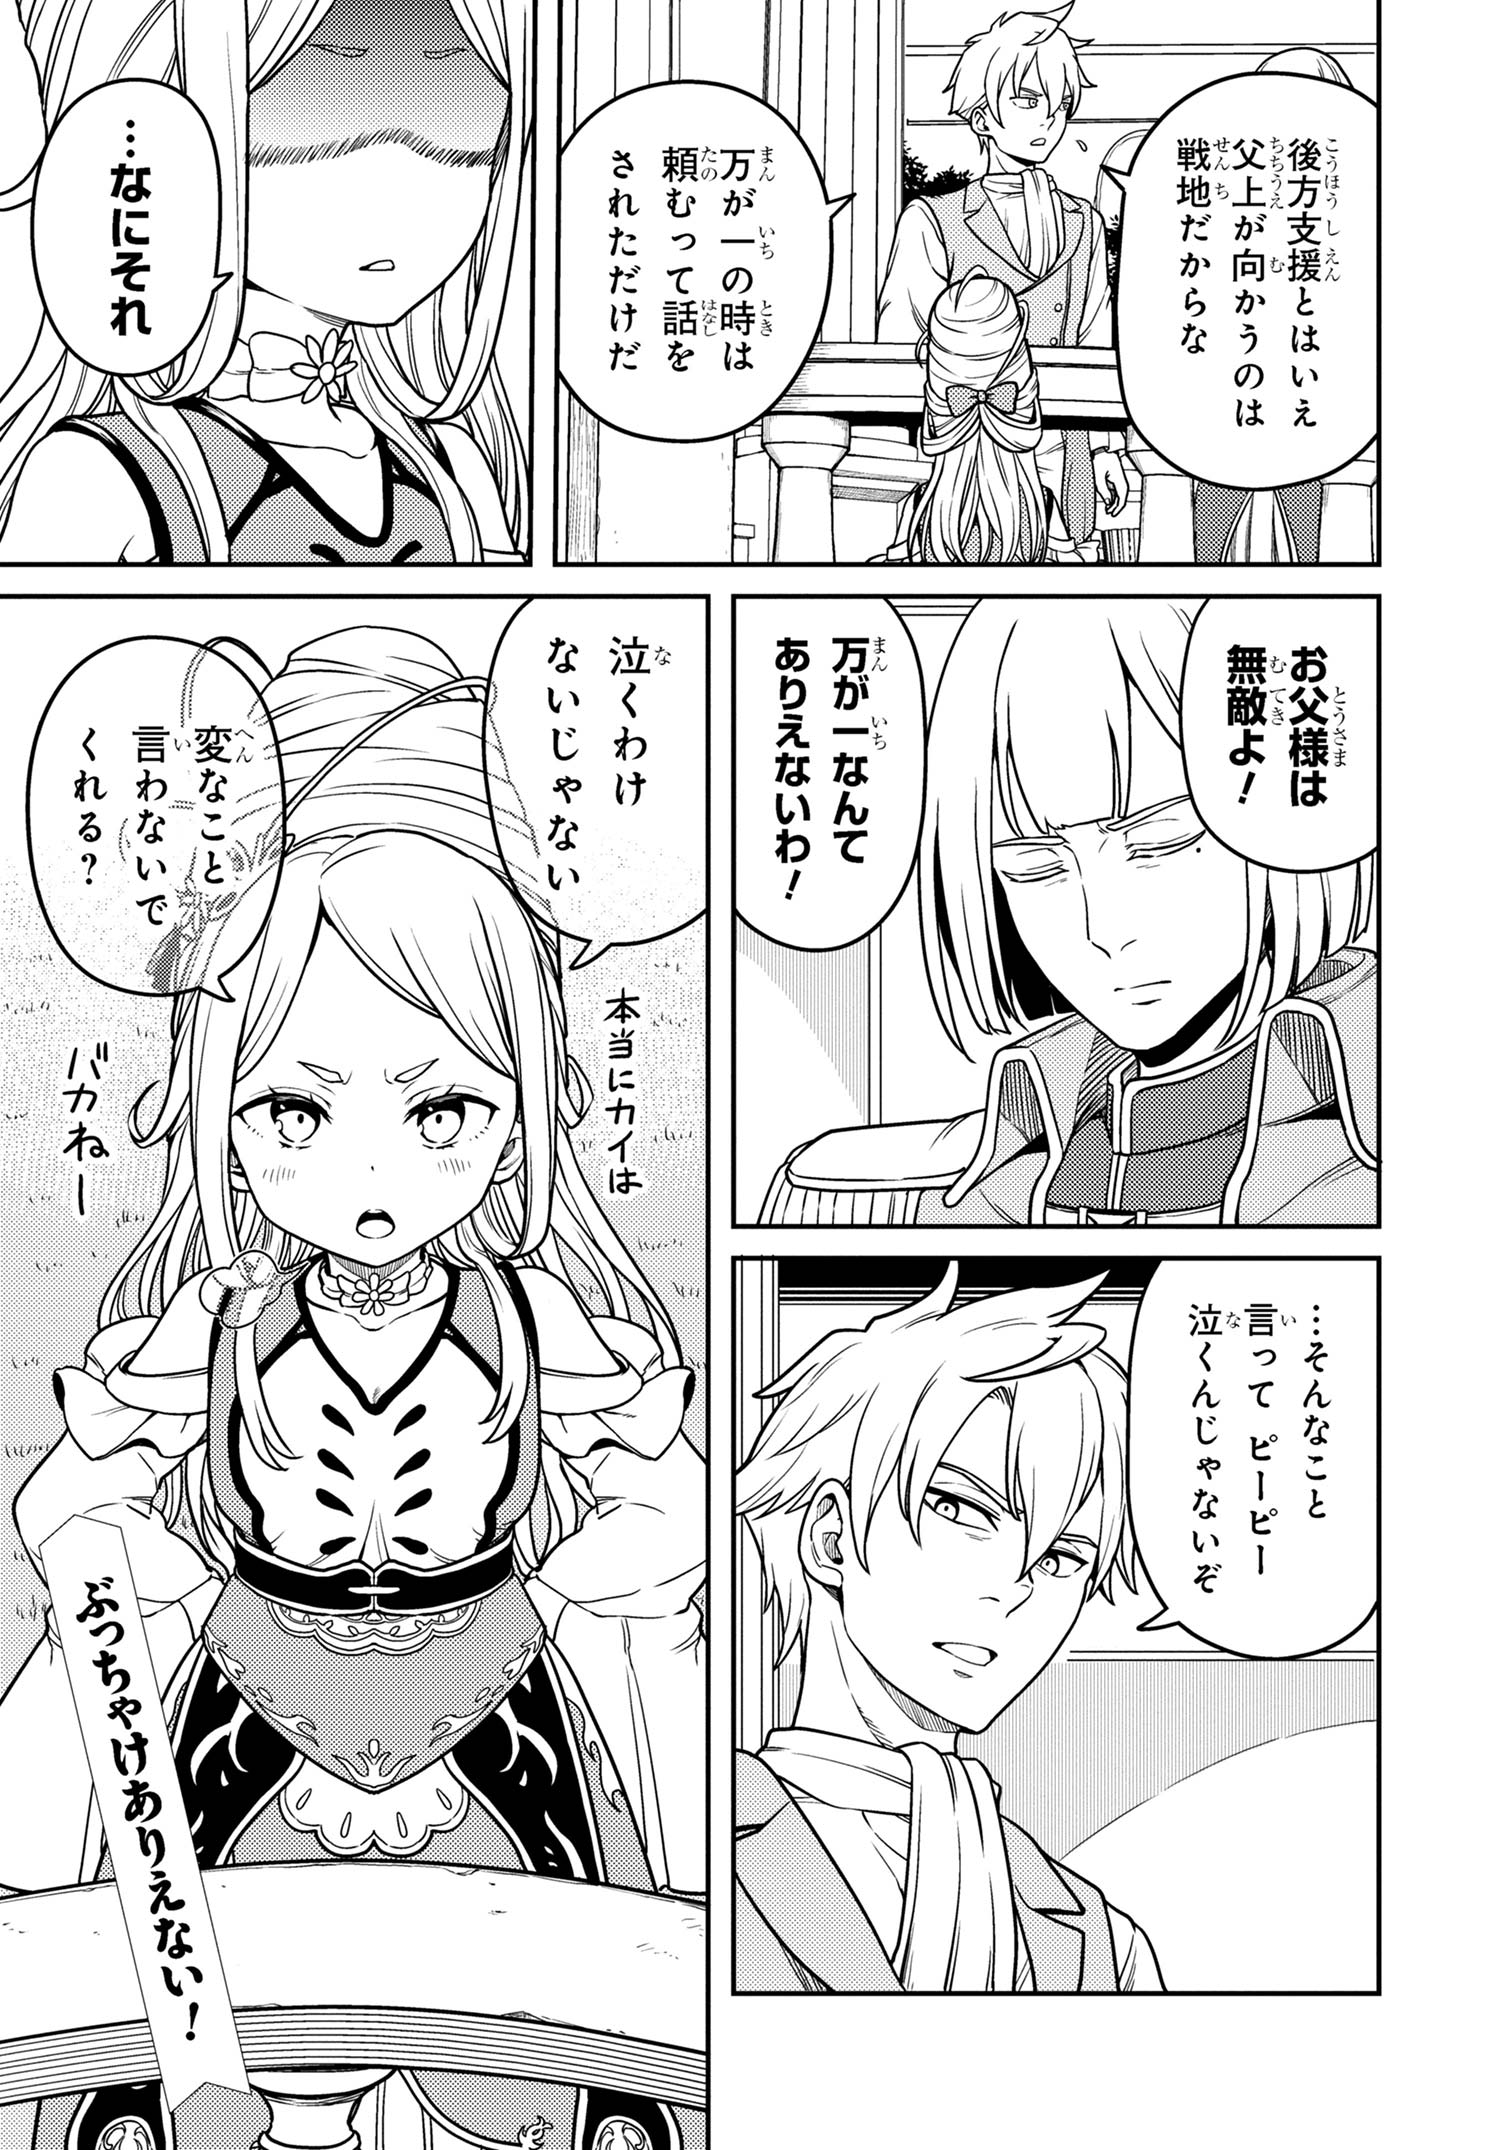 Sasaki to Pii-chan - Chapter 16.2 - Page 18